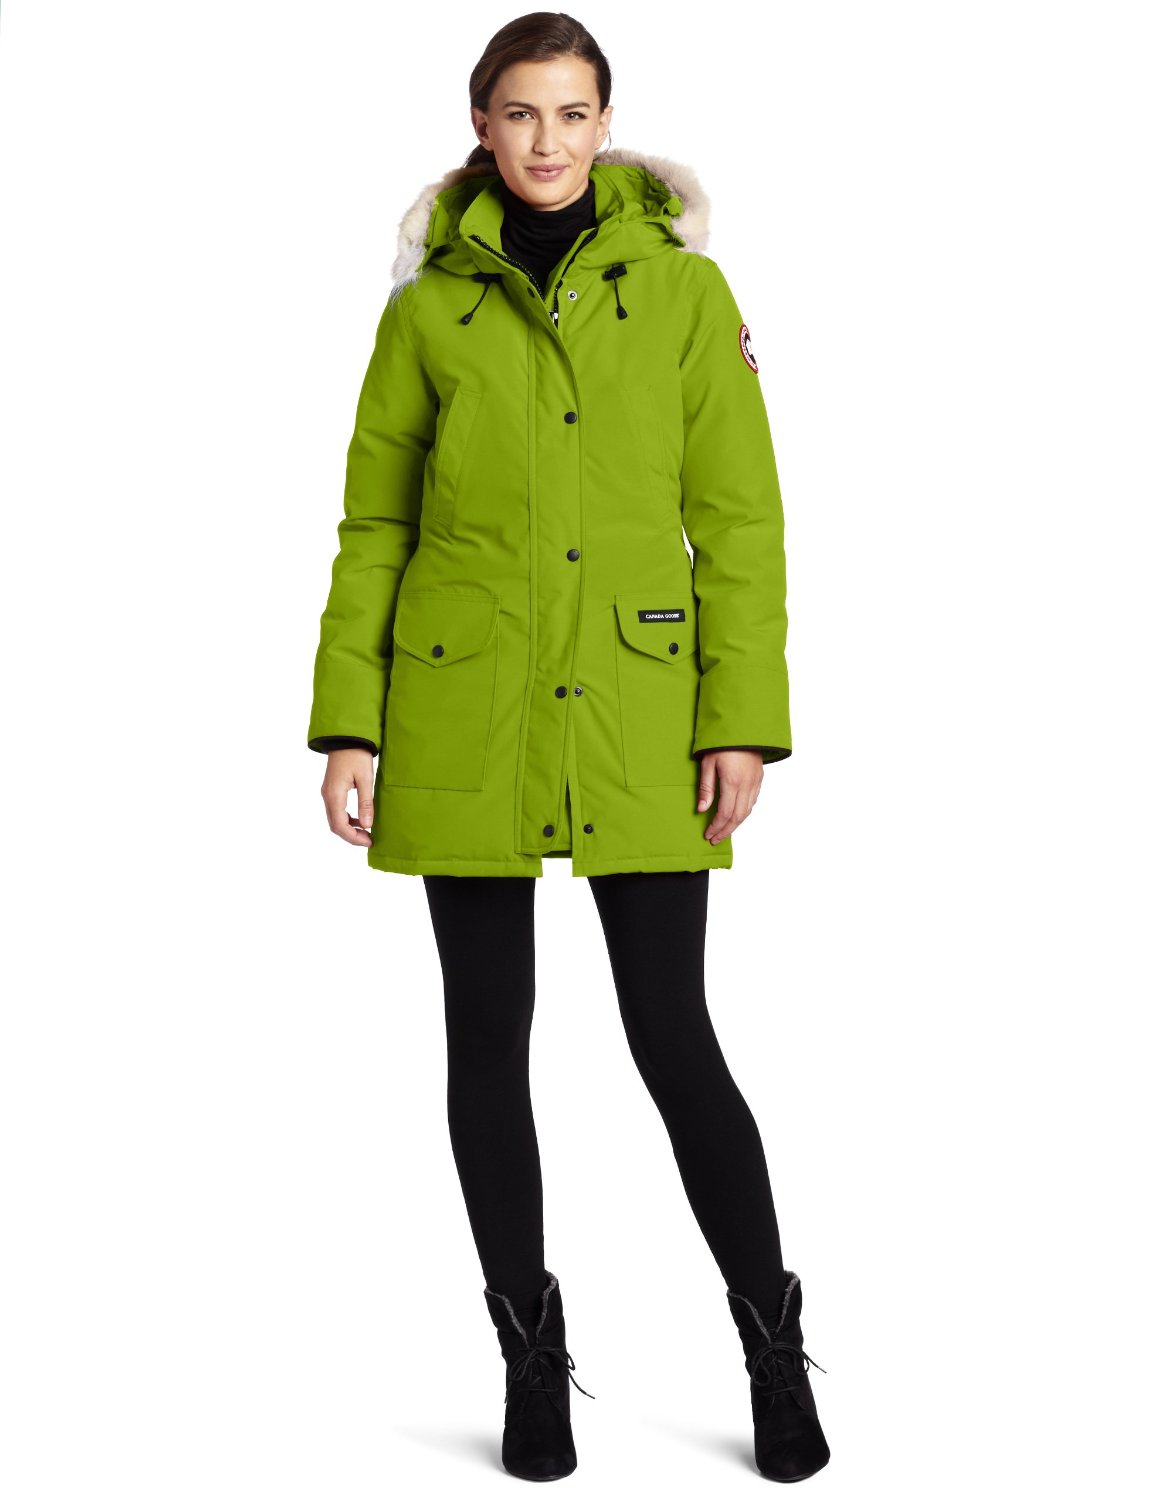 Canada Goose langford parka online store - Canada Goose Trillium Parka best winter Parka? - My Fashion Wants